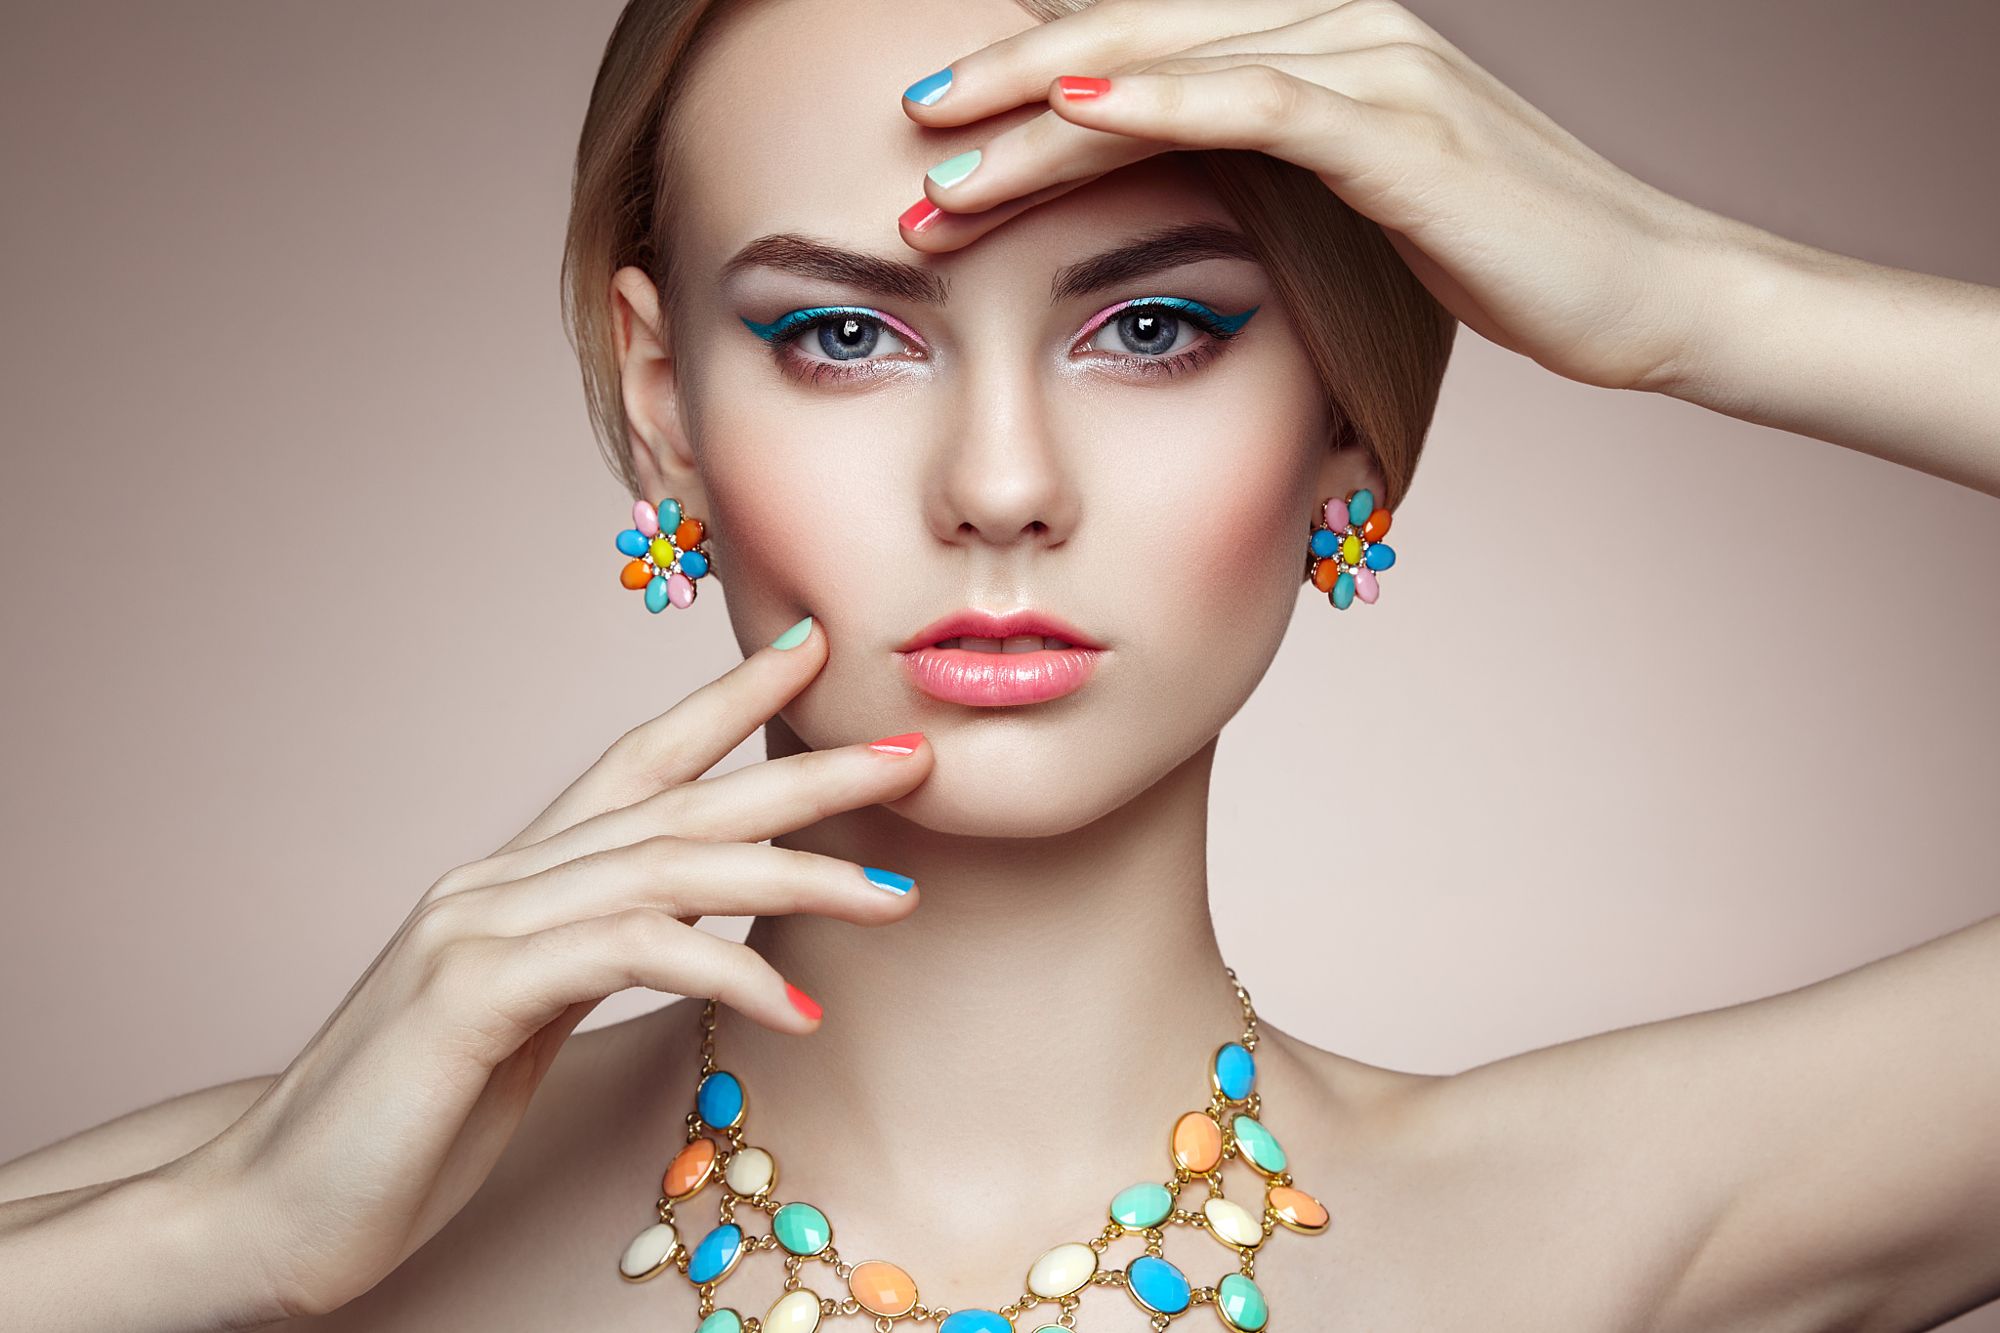 Oleg Gekman Women Blonde Straight Hair Colorful Earring Necklace Jewelry Eyeshadow Fashion Simple Ba 2000x1333